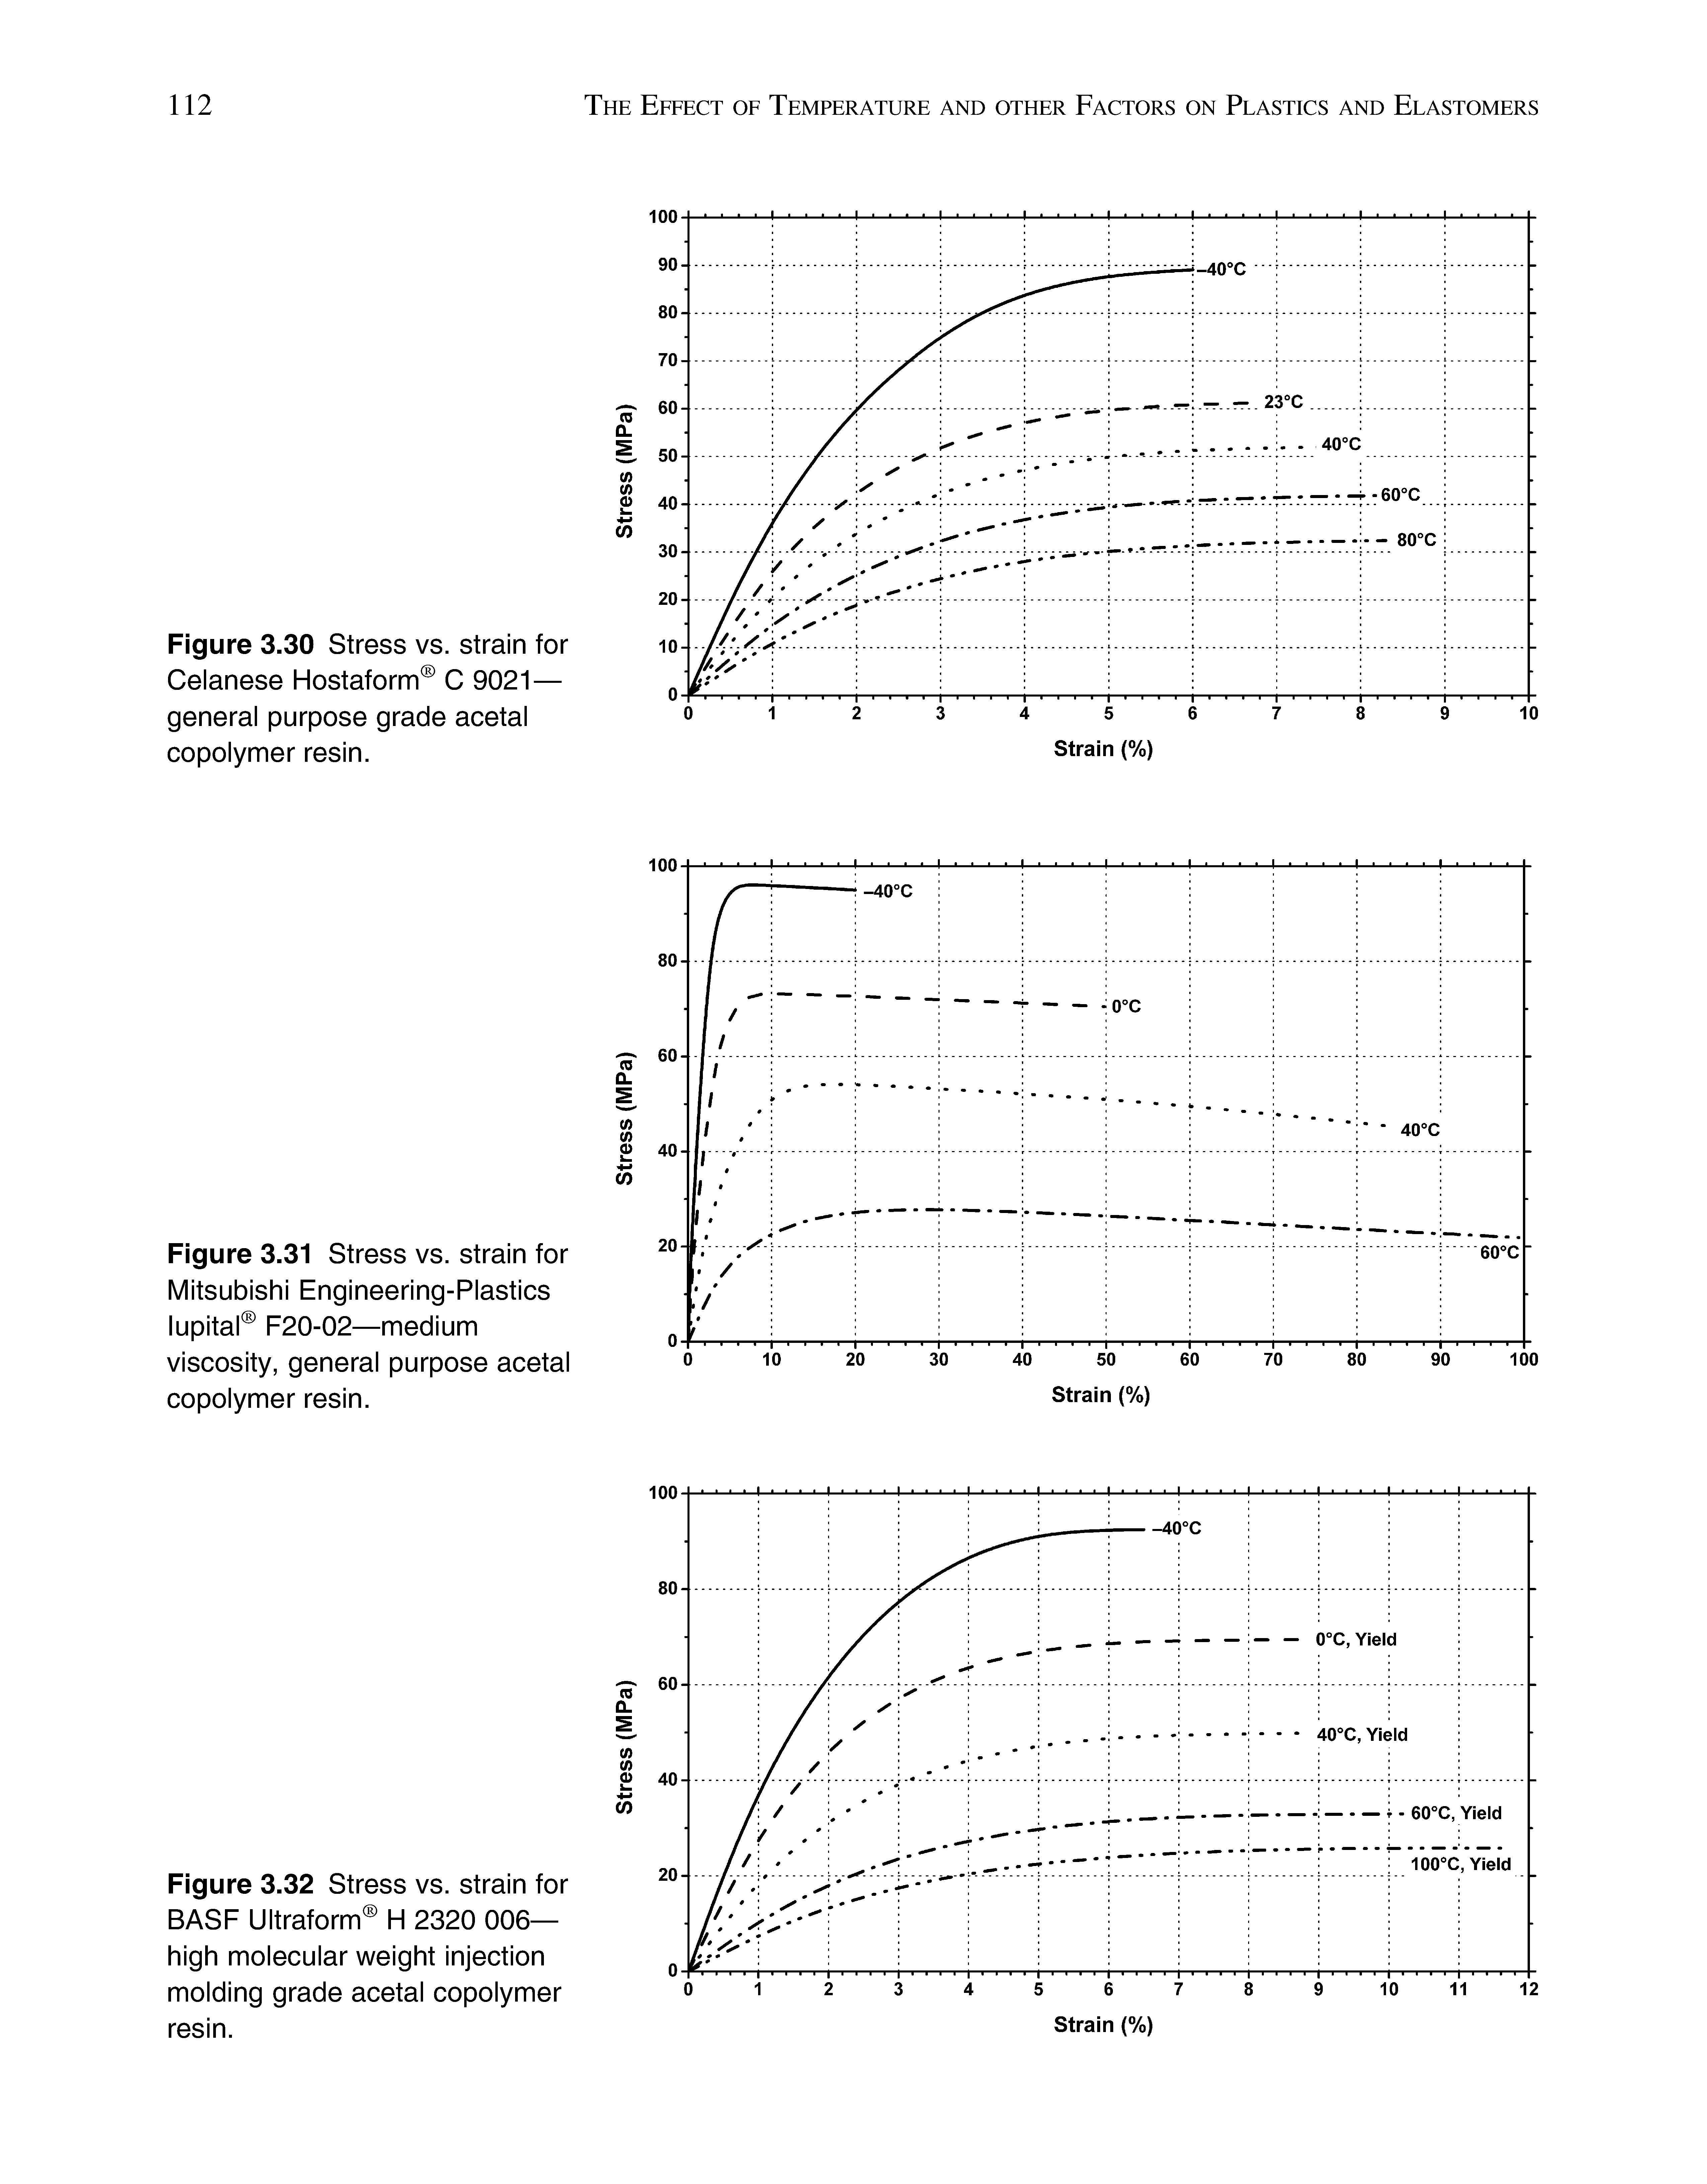 Figure 3.32 Stress vs. strain for BASF Ultraform H 2320 006-high molecular weight injection molding grade acetal copolymer resin.